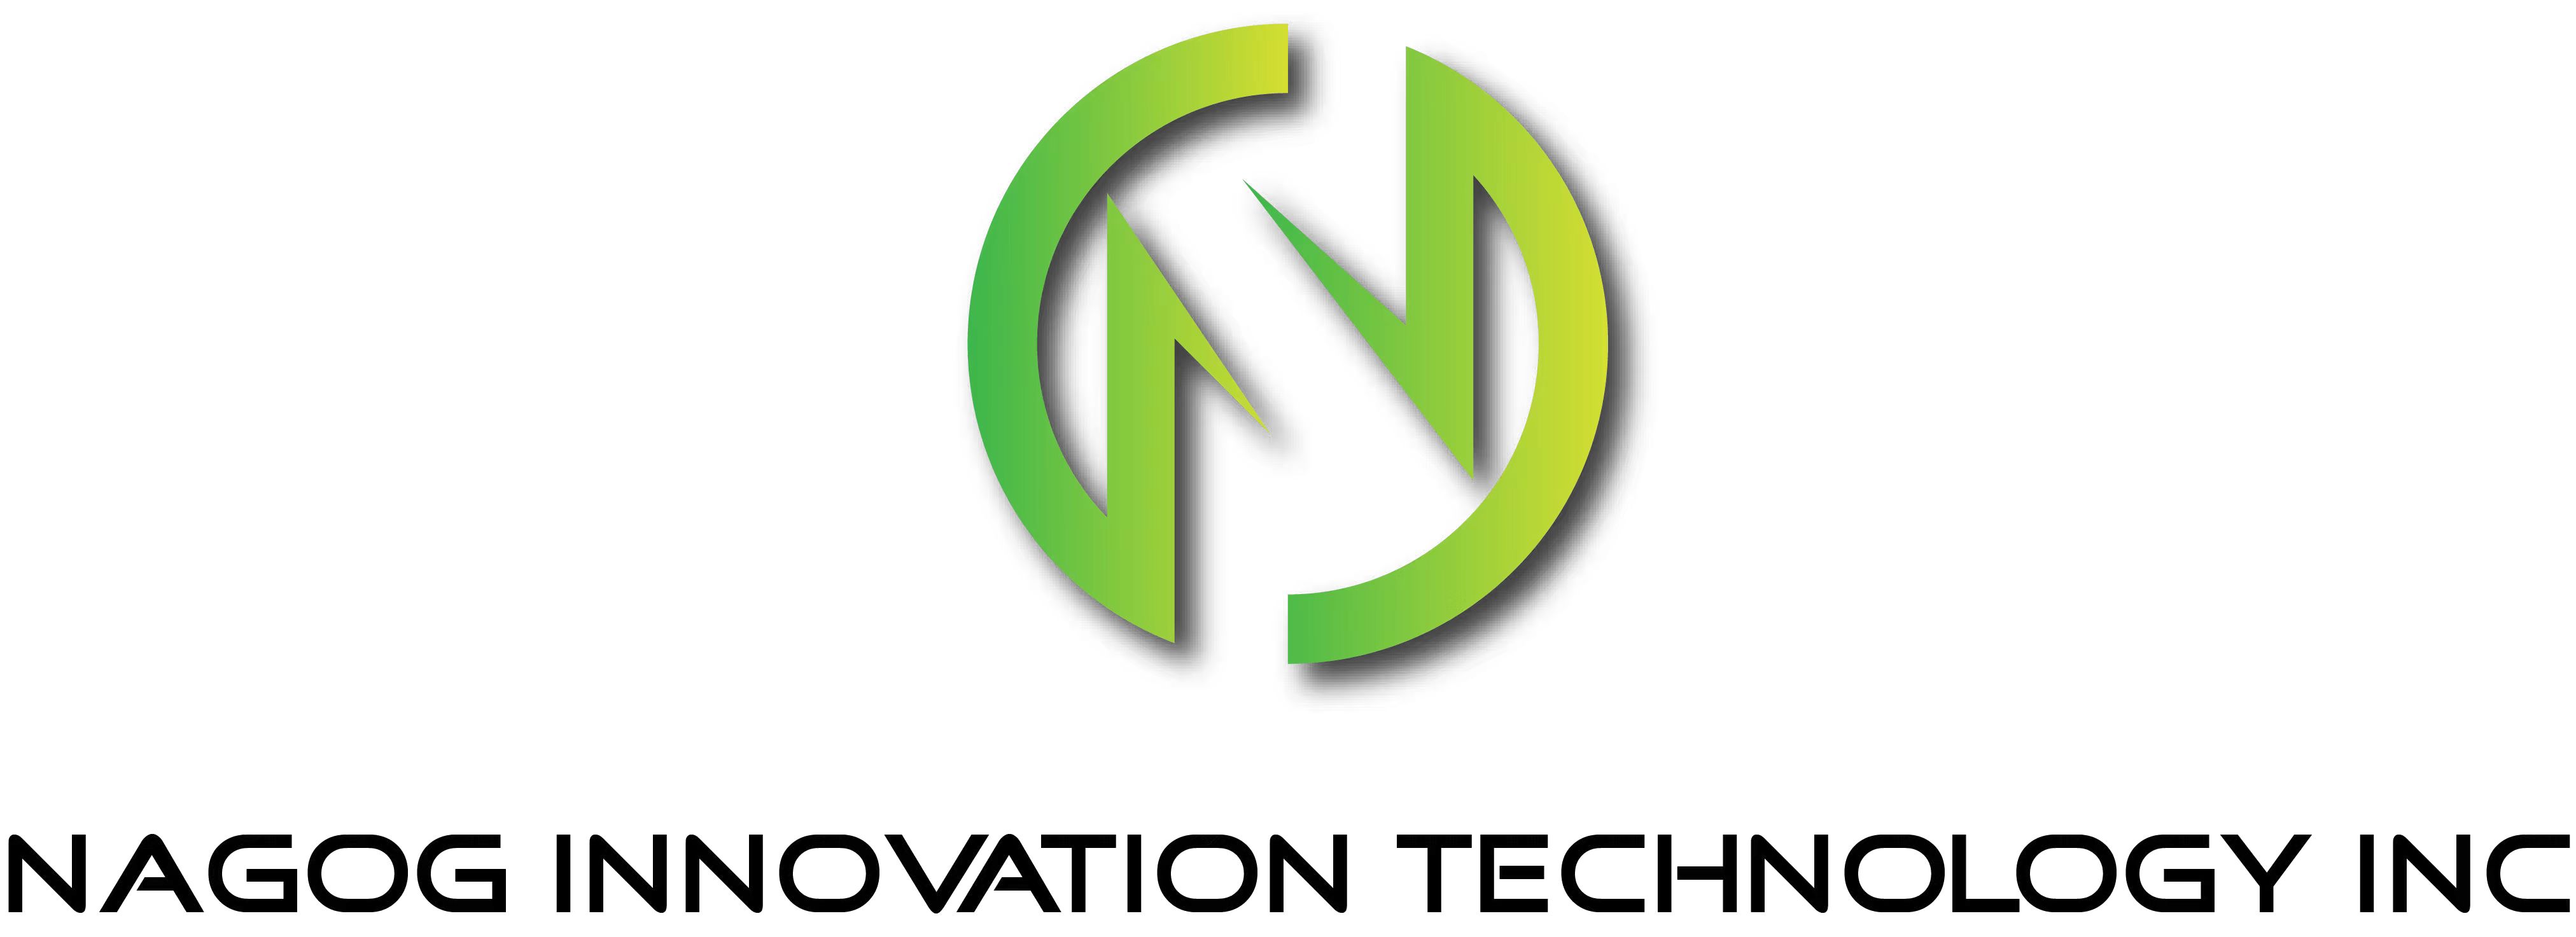 Nagog Innovation Technology Inc